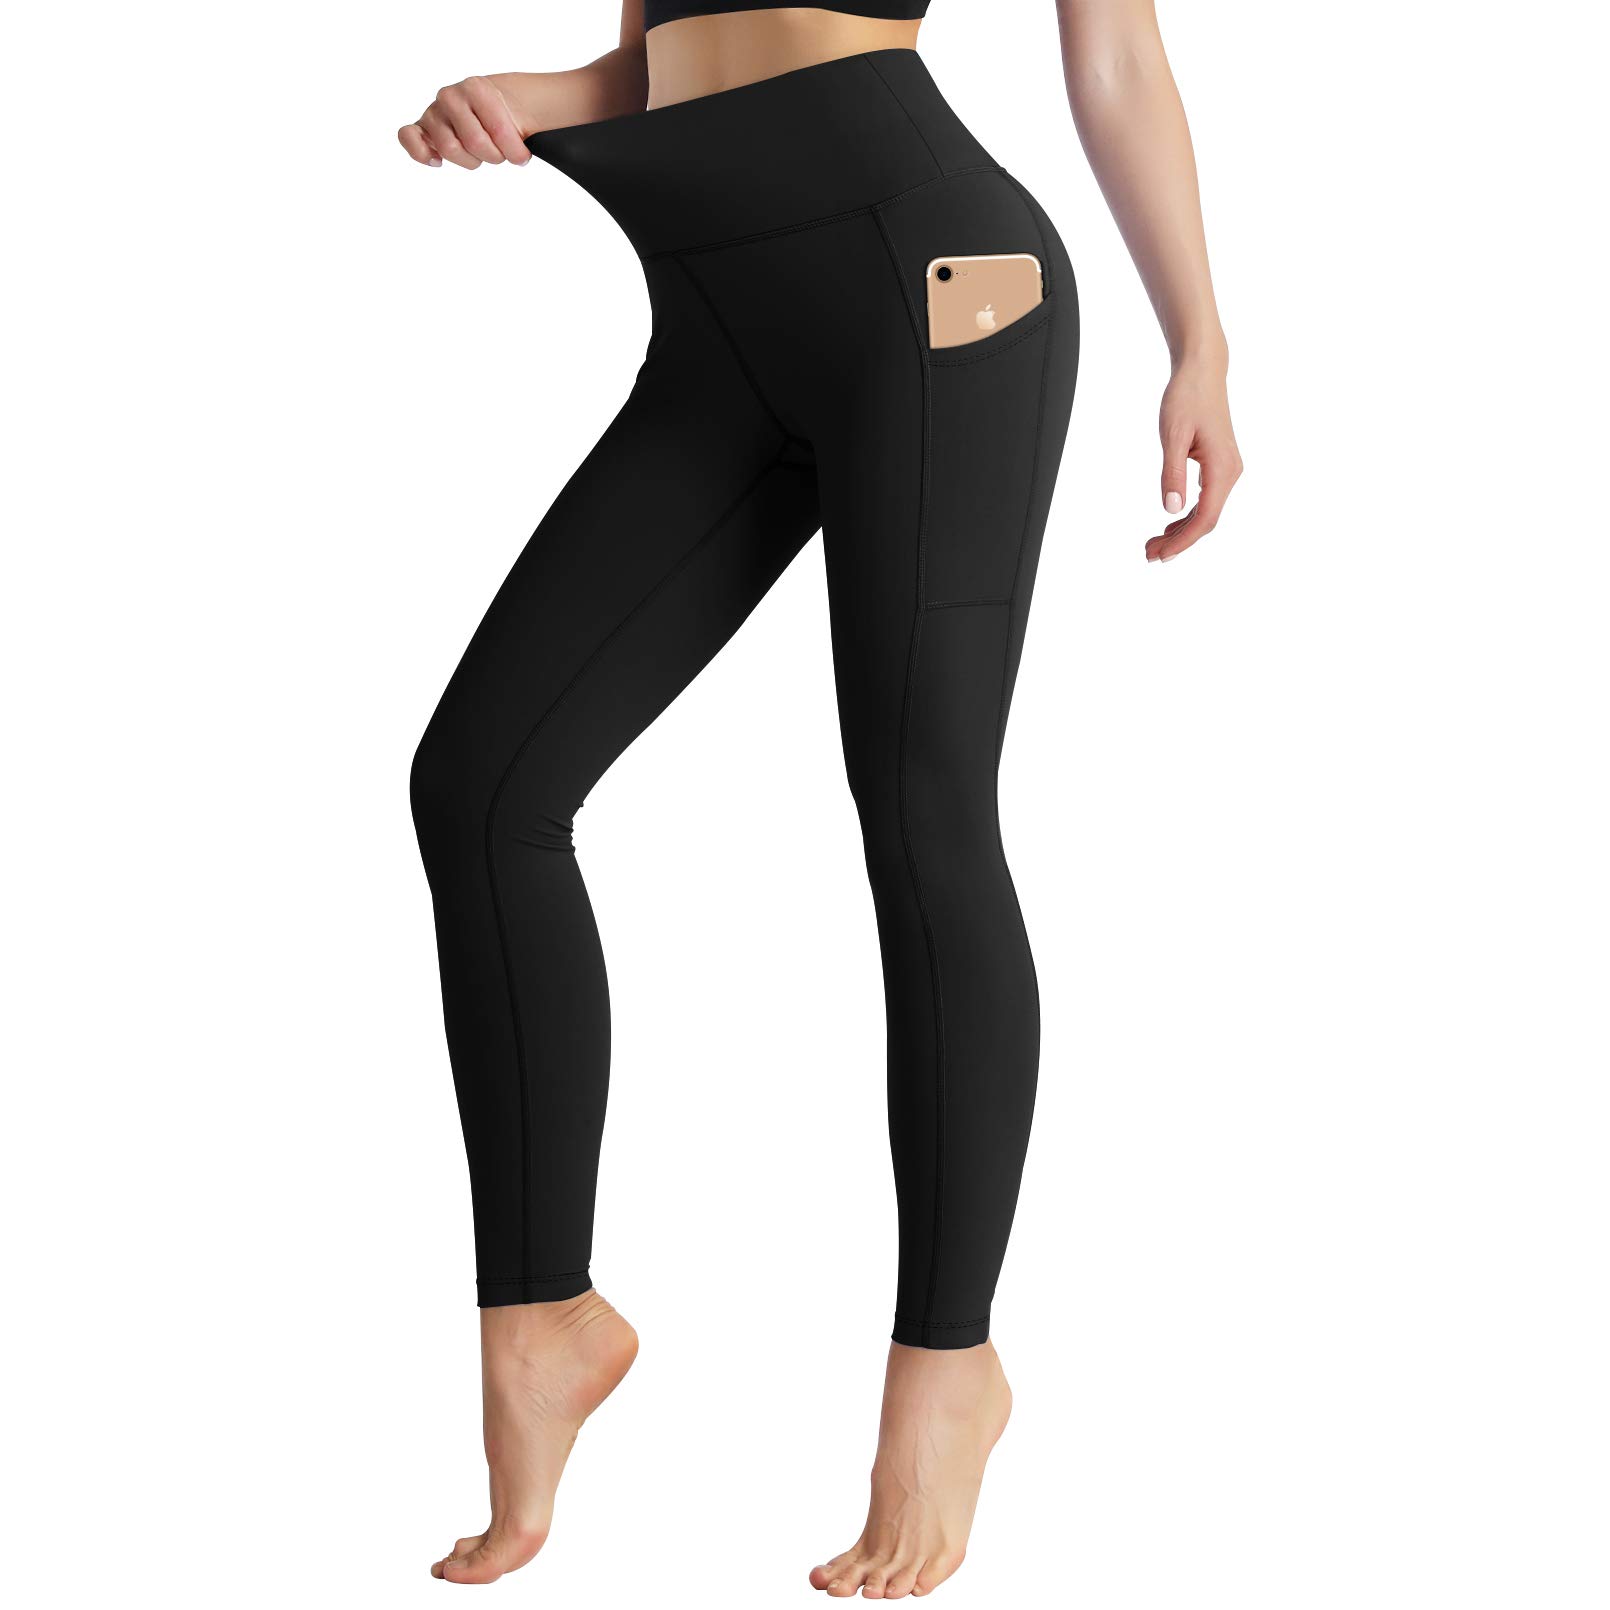 Buy Women's Yoga Pants with Pockets, High Waist Tummy Control